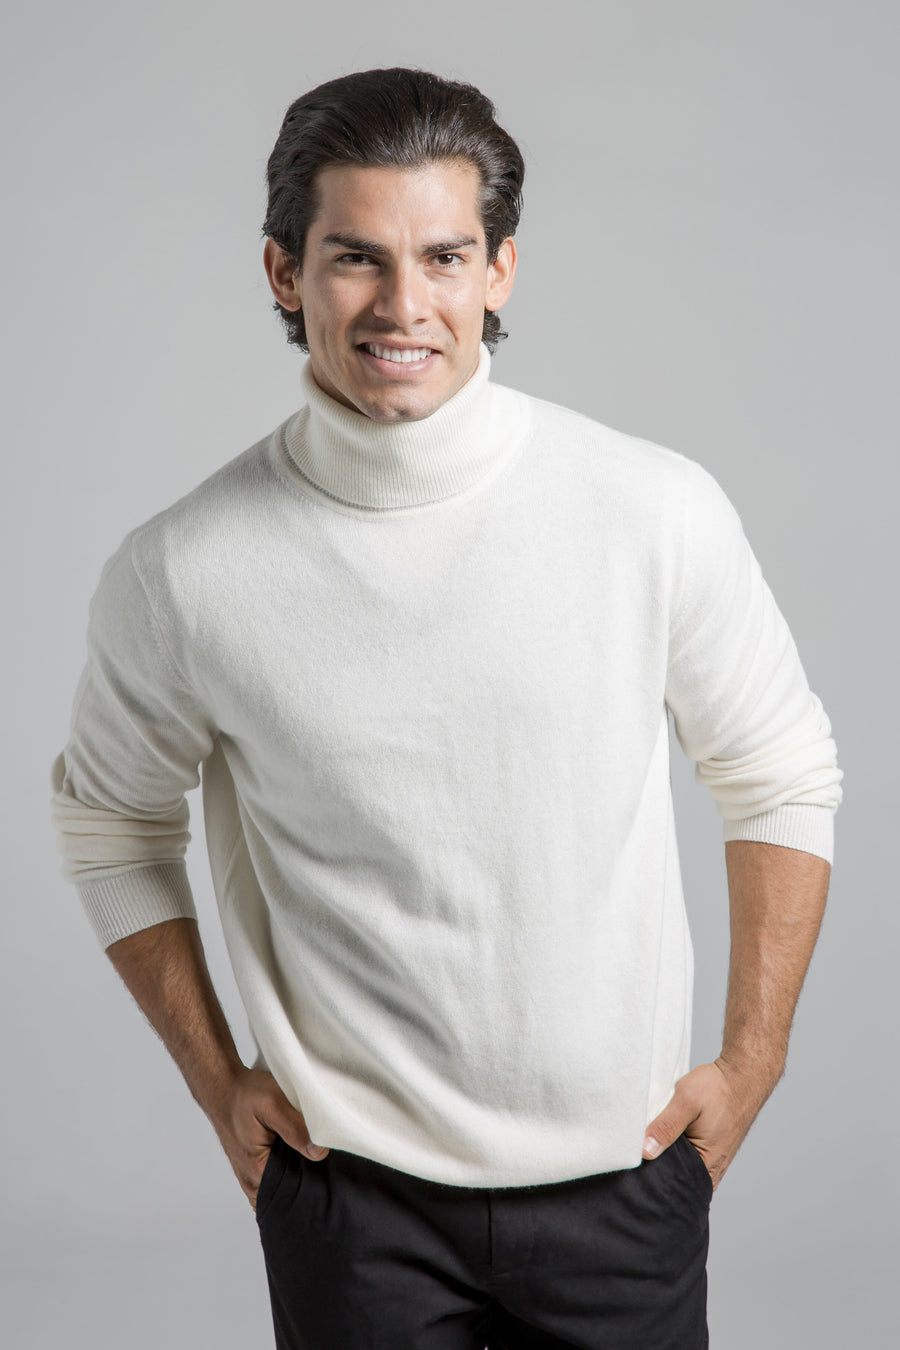 pine cashmere mens classic 100% pure organic cashmere turtleneck sweater in white